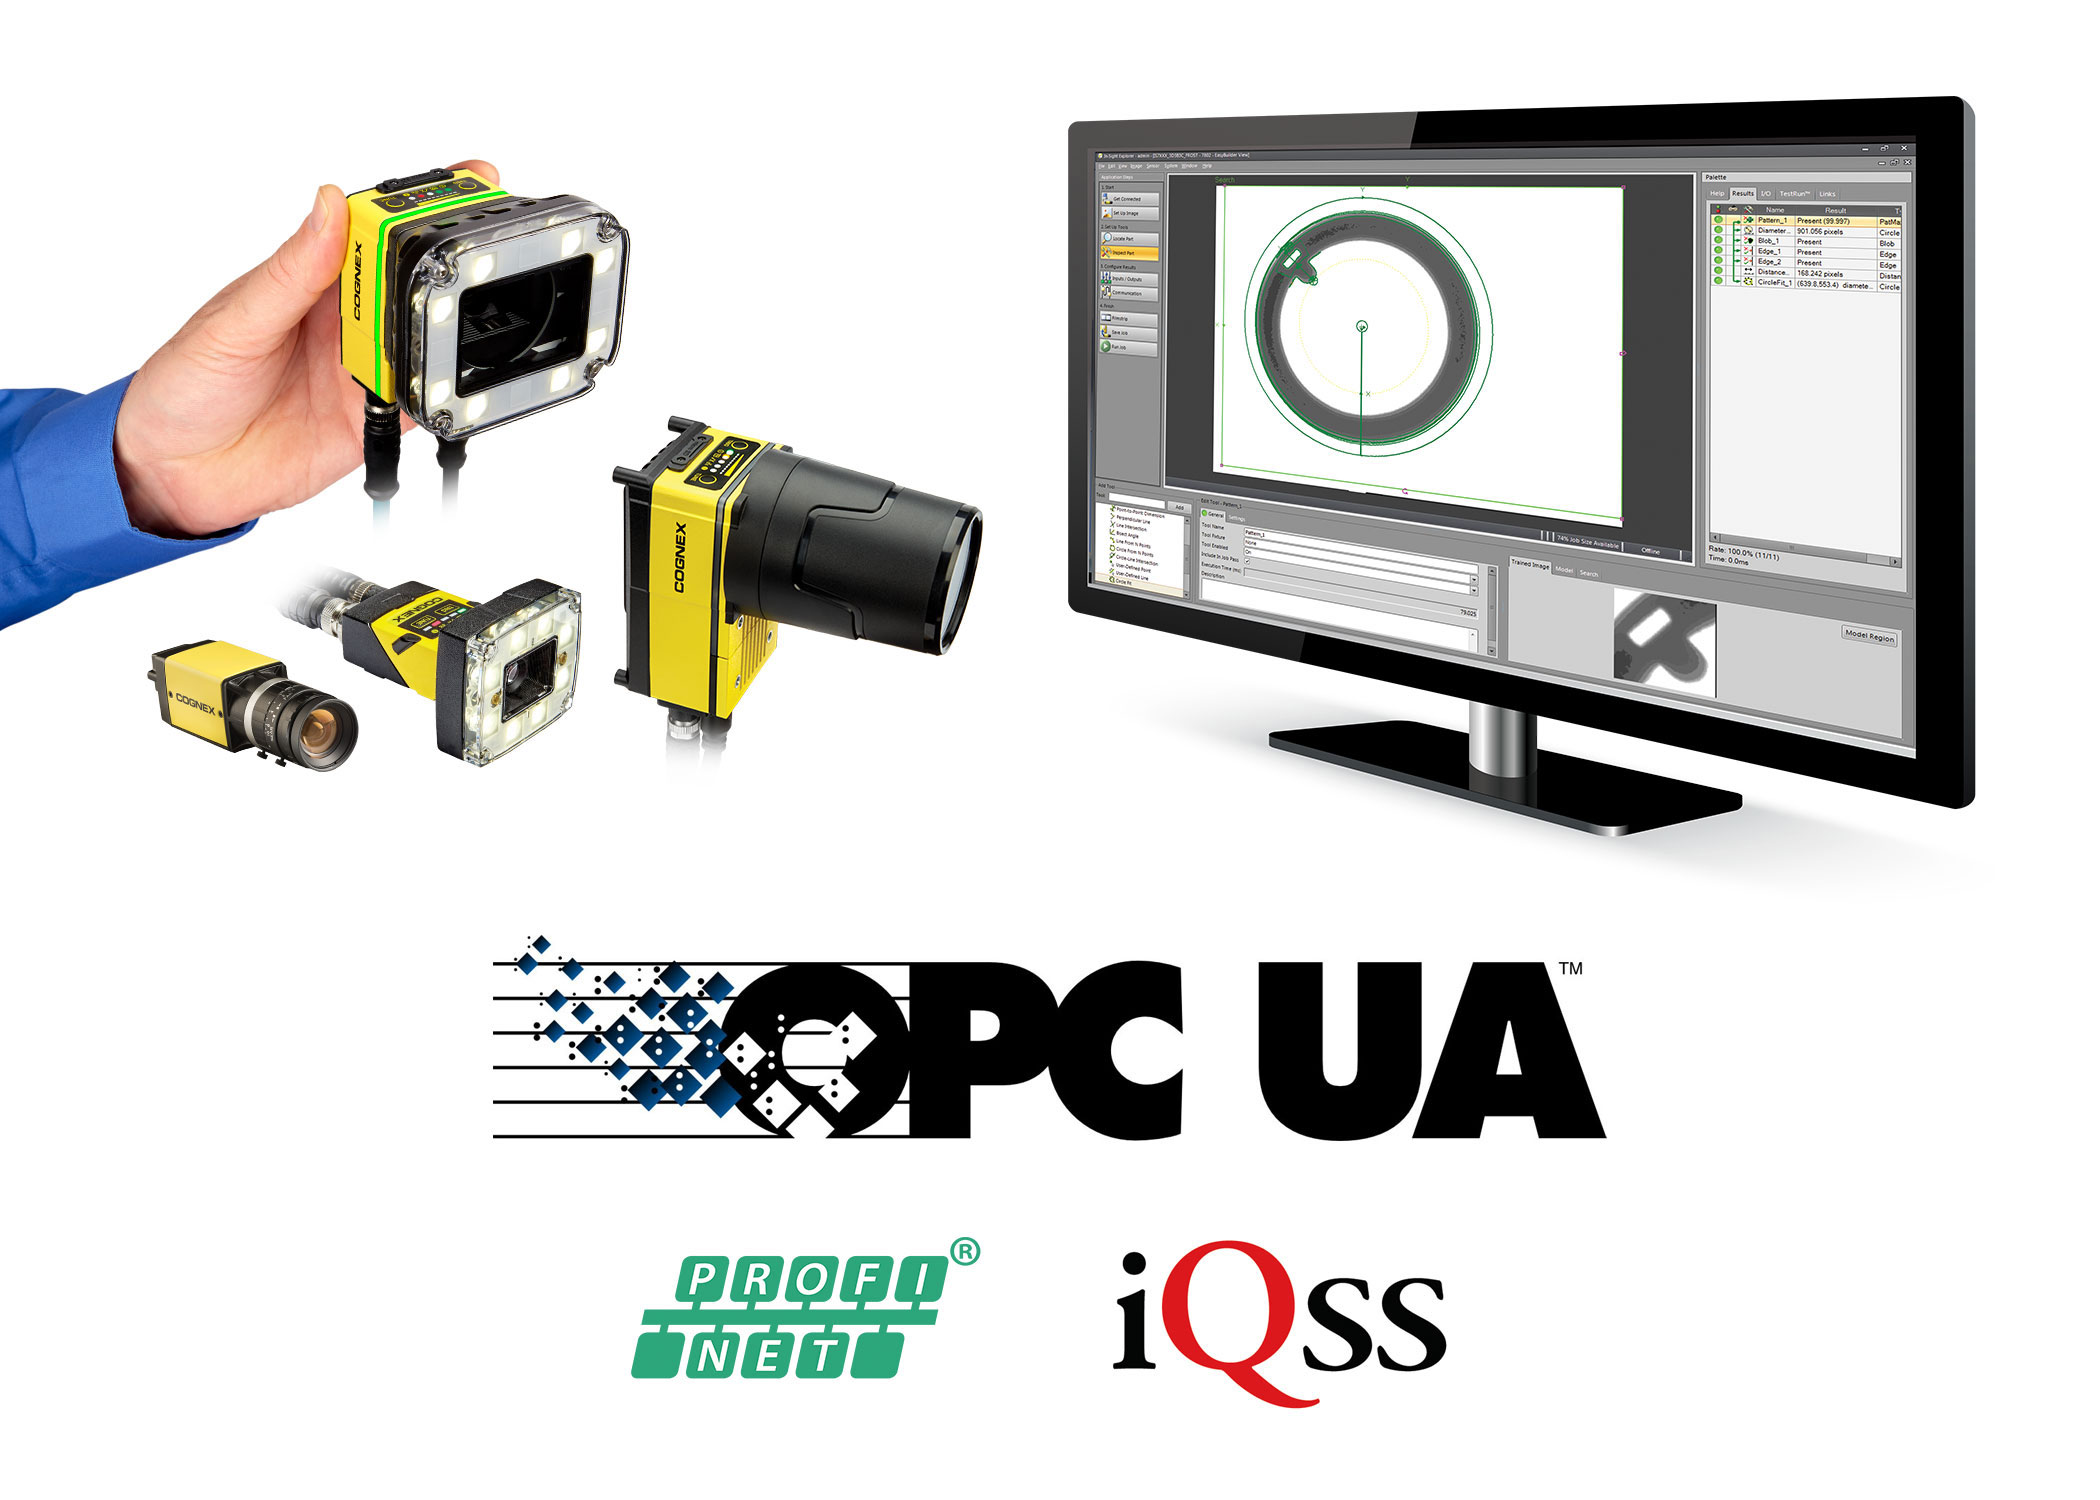 OPC-UA PROFINET iQSS cognex视觉系统和监控软件